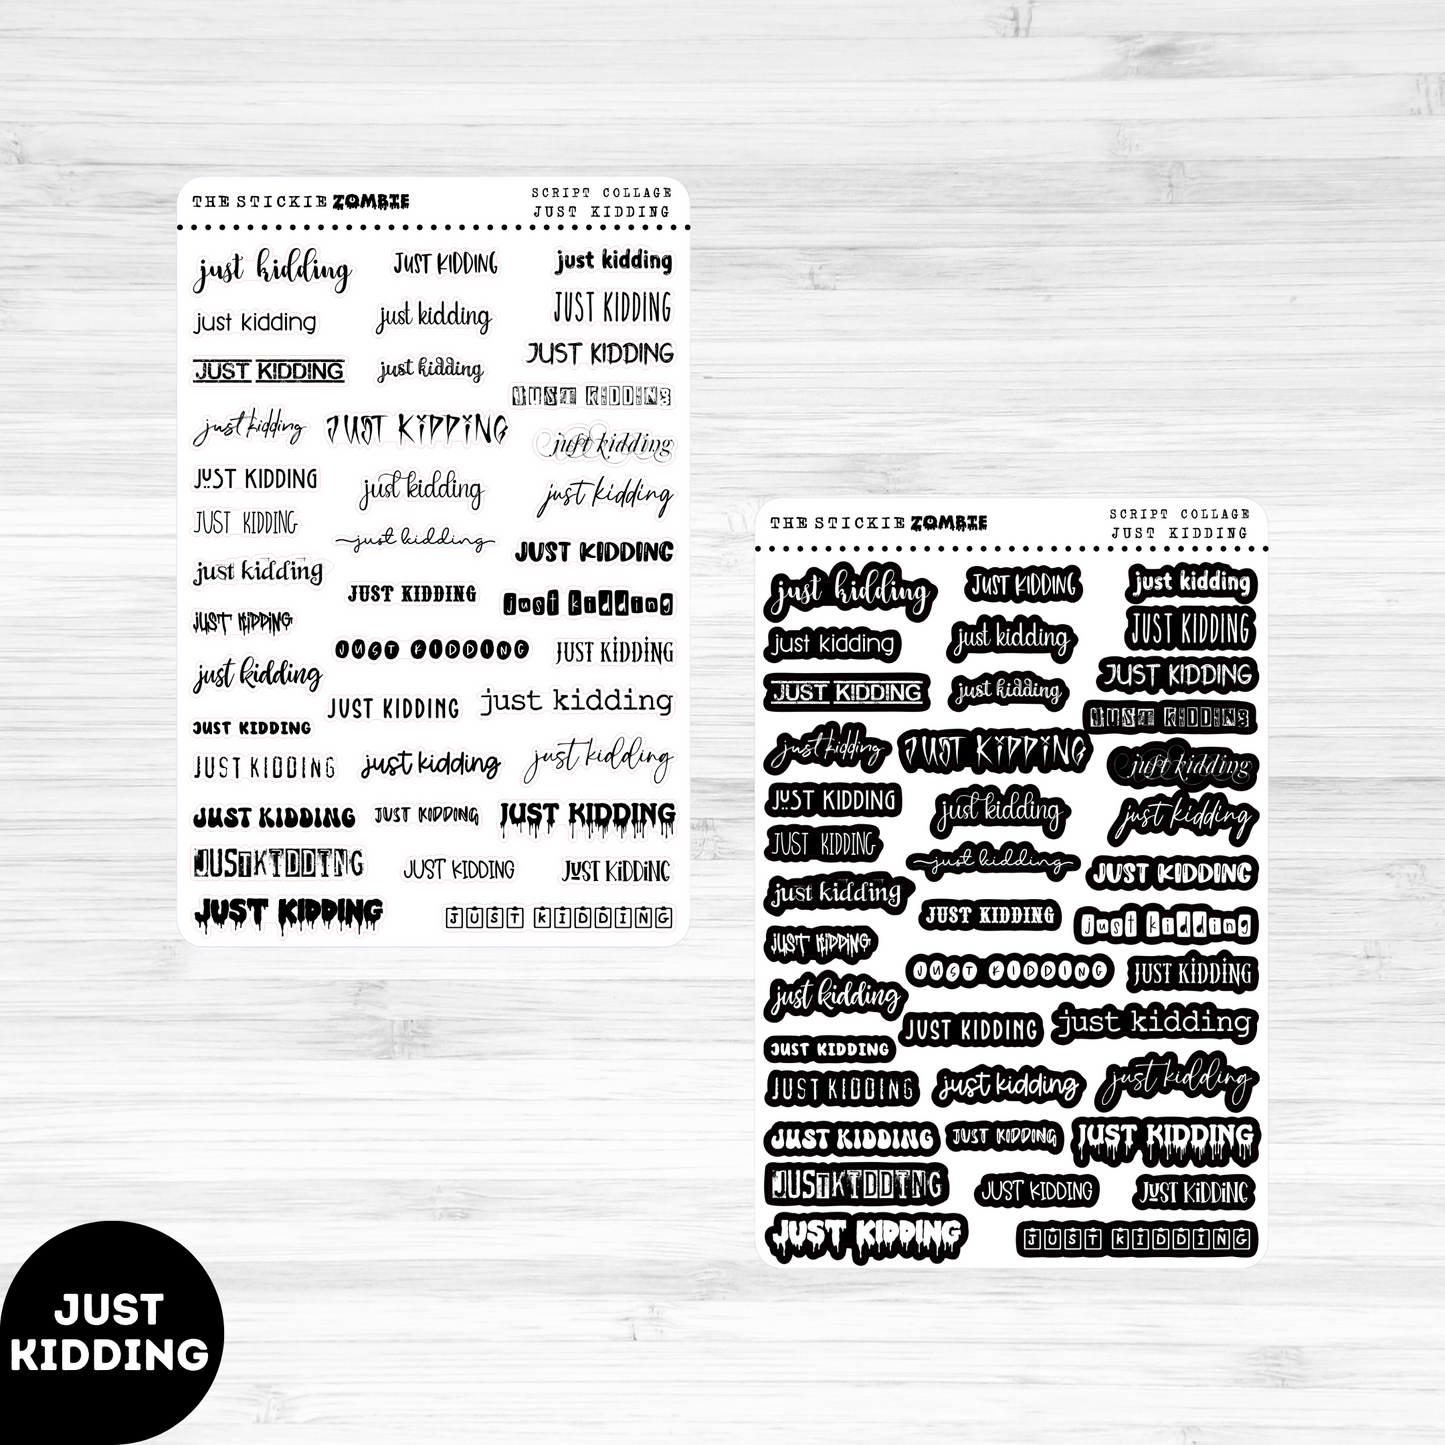 Script Words / Collage / Just Kidding